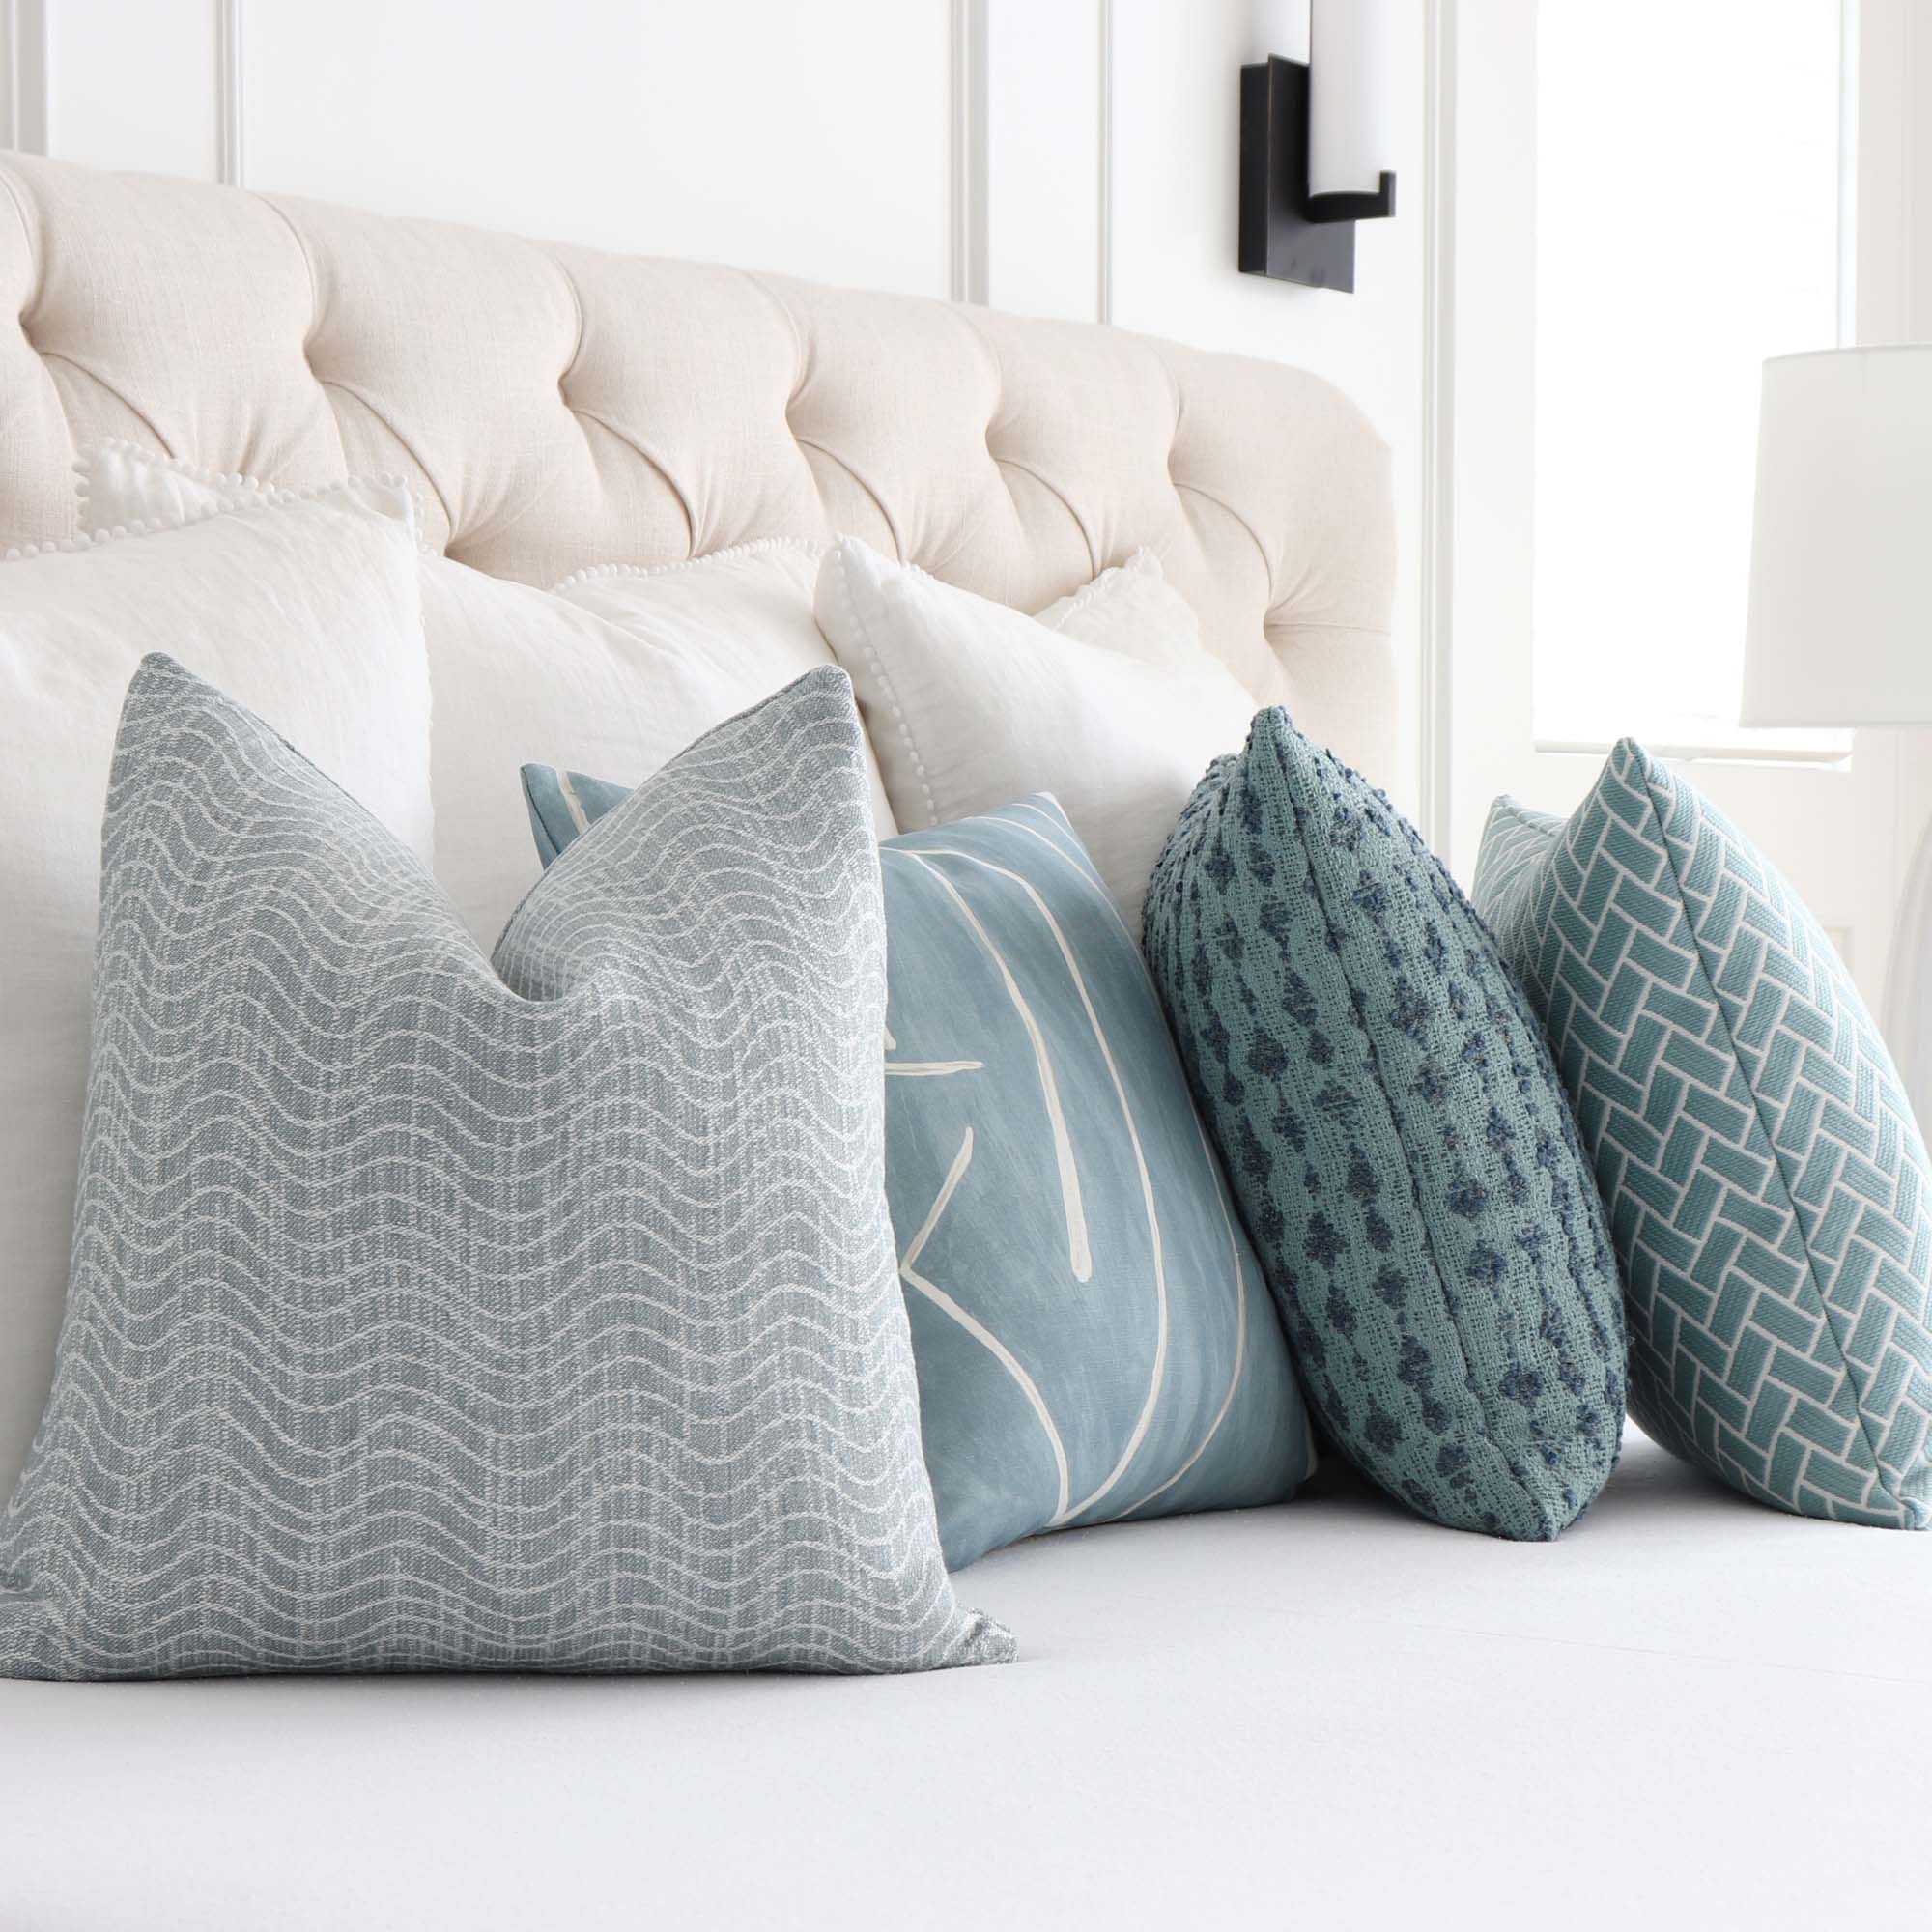 Kelly Wearstler Lee Jofa Dadami Pool Blue Woven Linen Striped Designer Throw Pillow Cover with Coordinating Throw Pillows